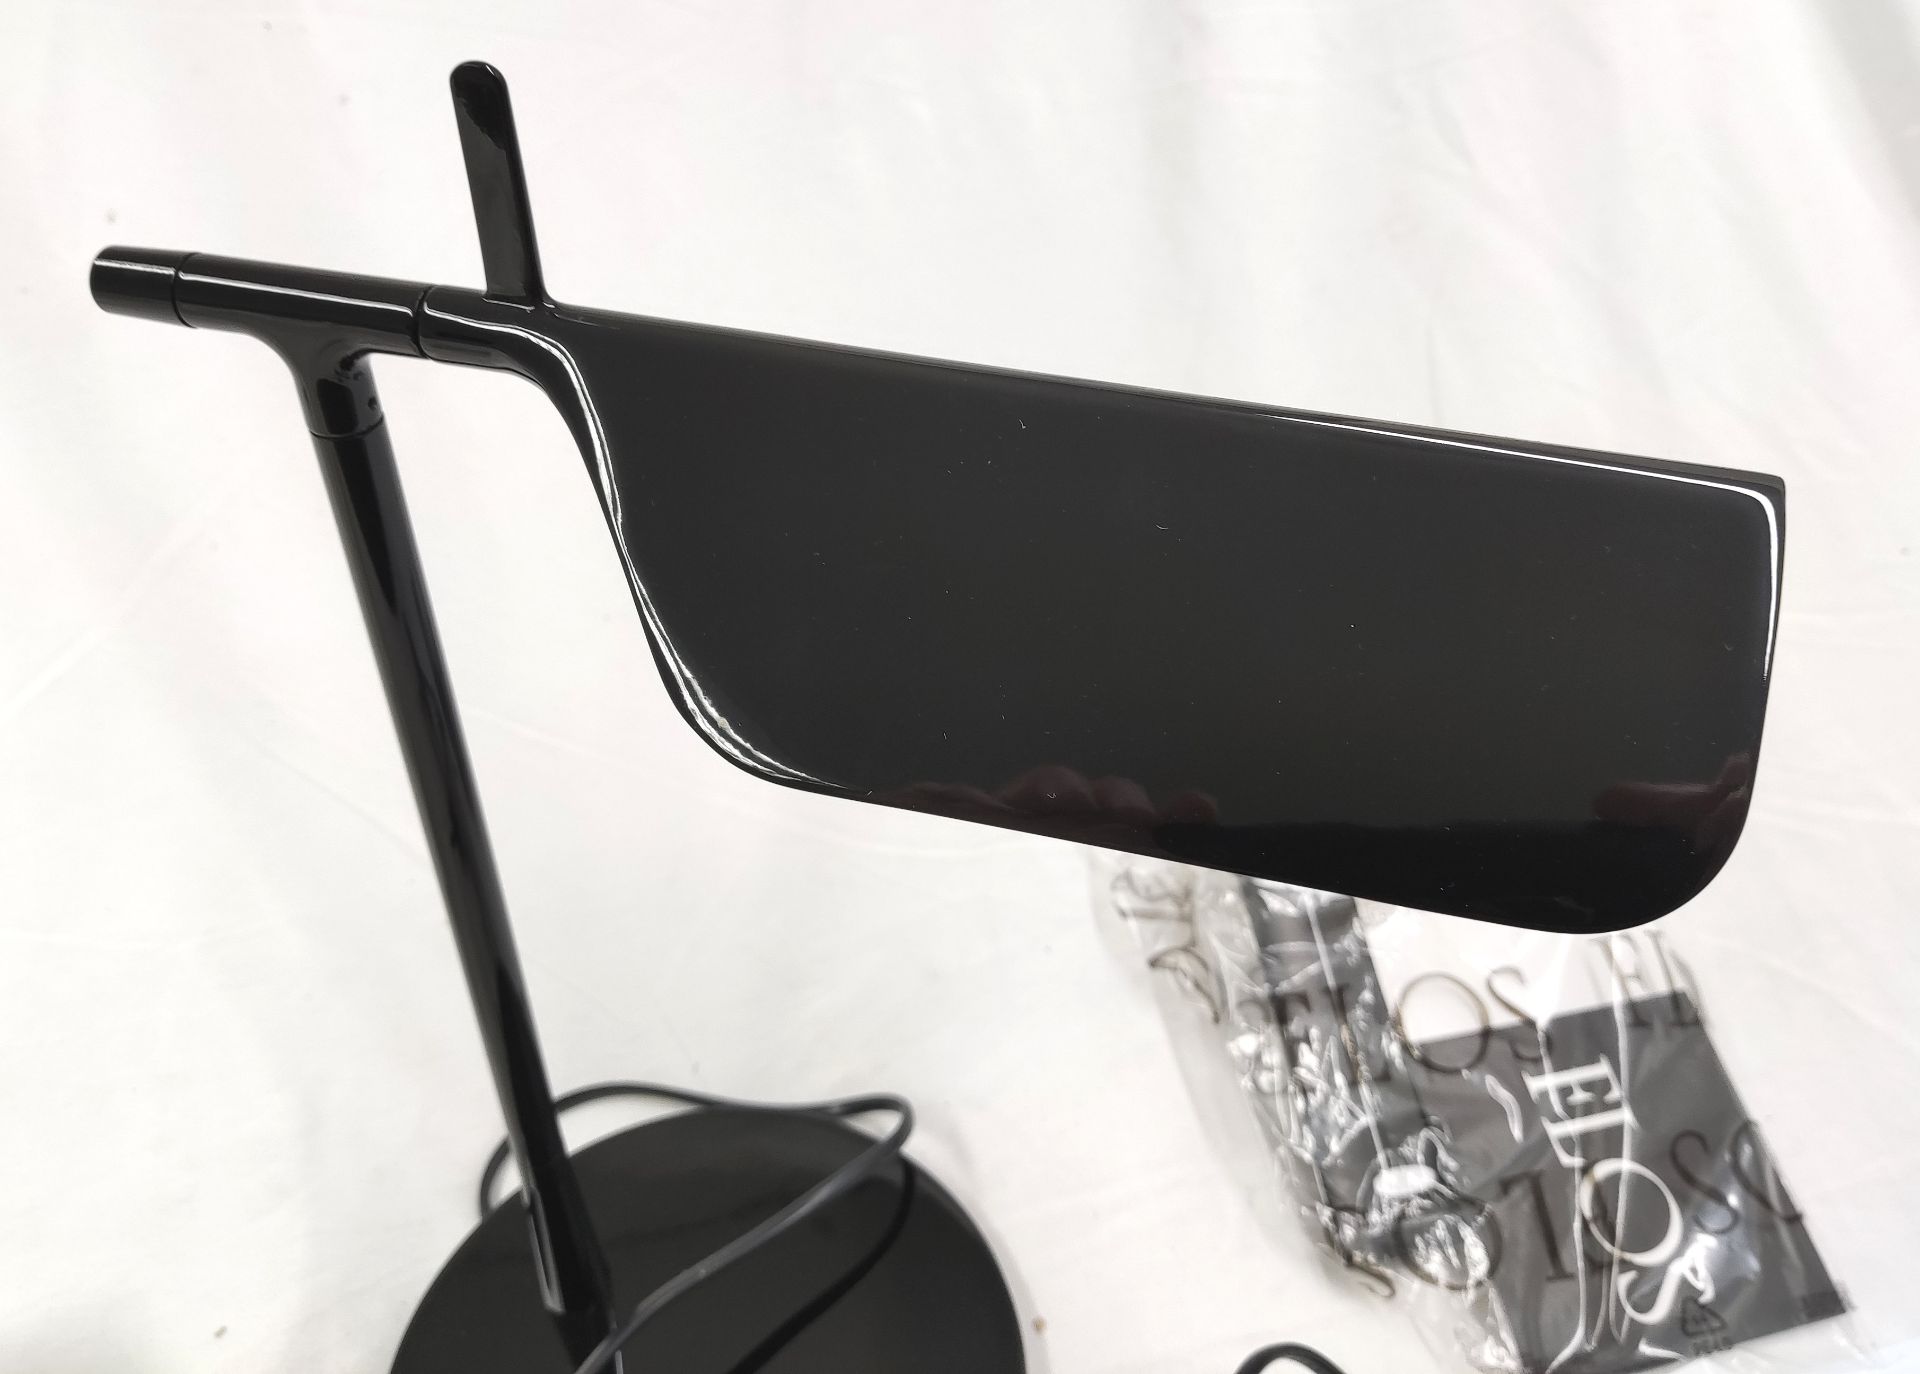 1 x FLOS Tab T Table Lamp With Adjustable Head - F6550330 - RRP £310 - Ref: ATR177-1/ATRPD - - Image 8 of 12